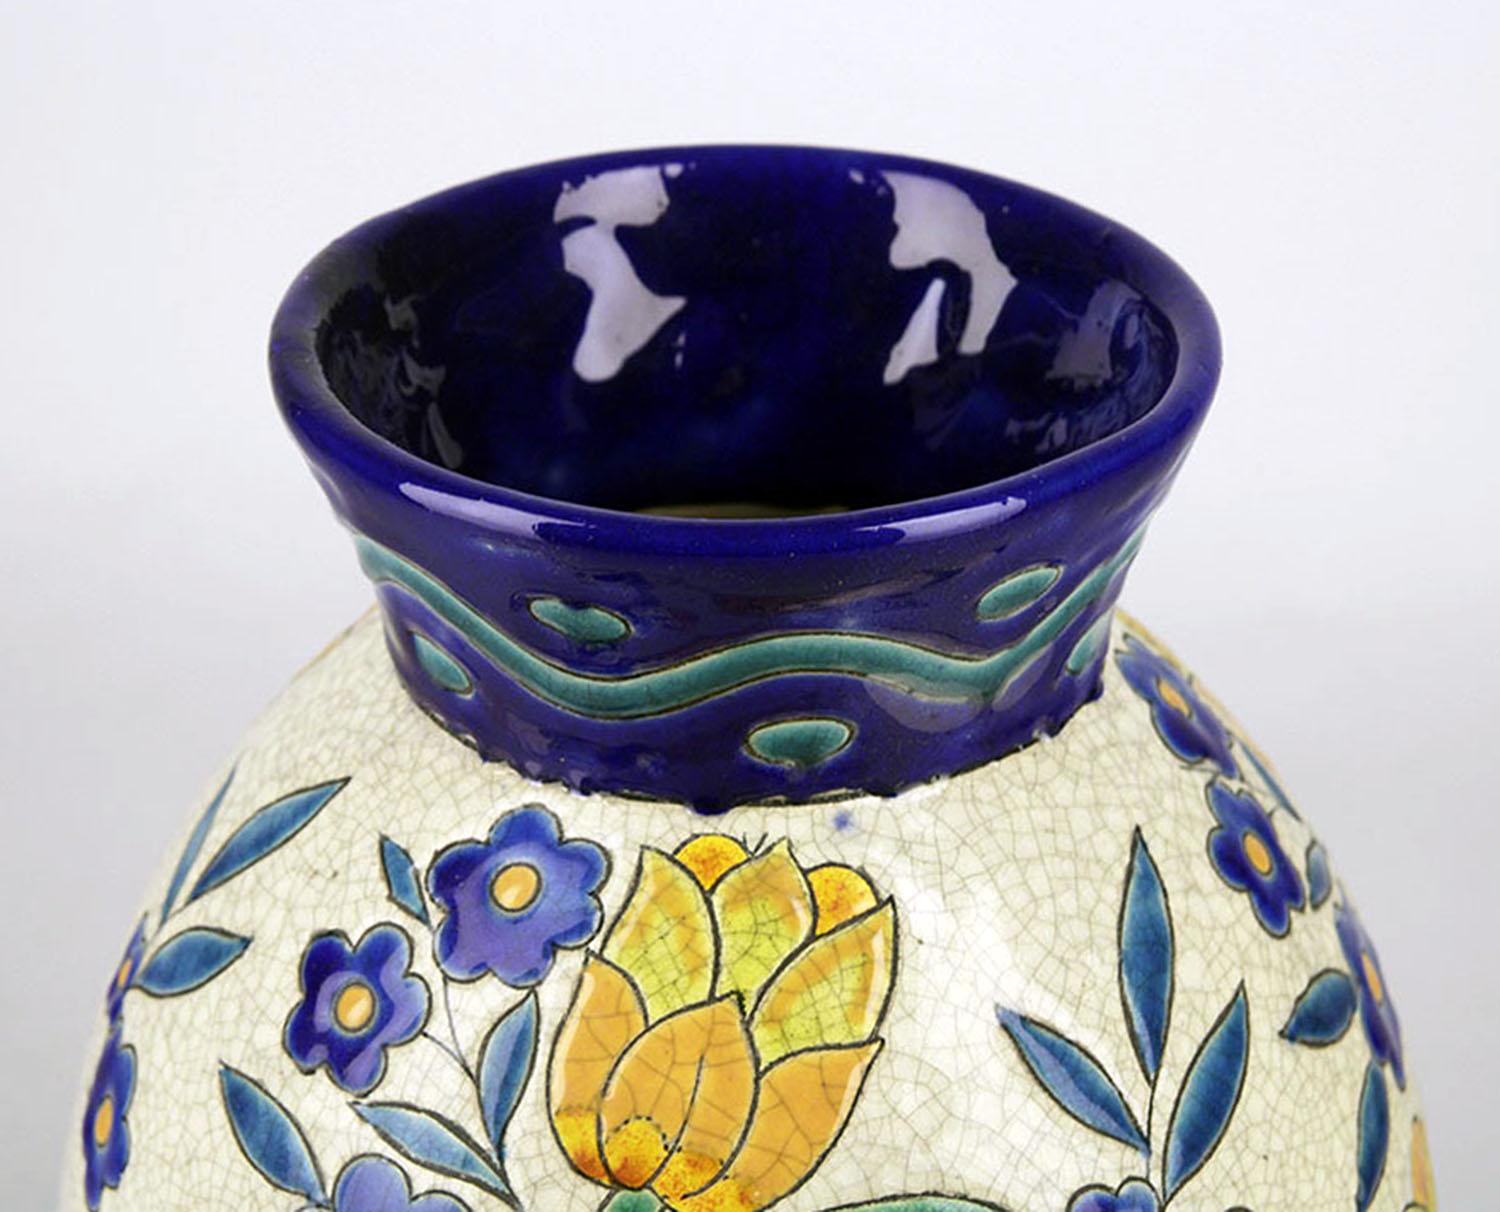 Art Deco Art Déco Belgian Glazed Pottery/Ceramic Charles Catteau-Like Vase by Boch Freres For Sale